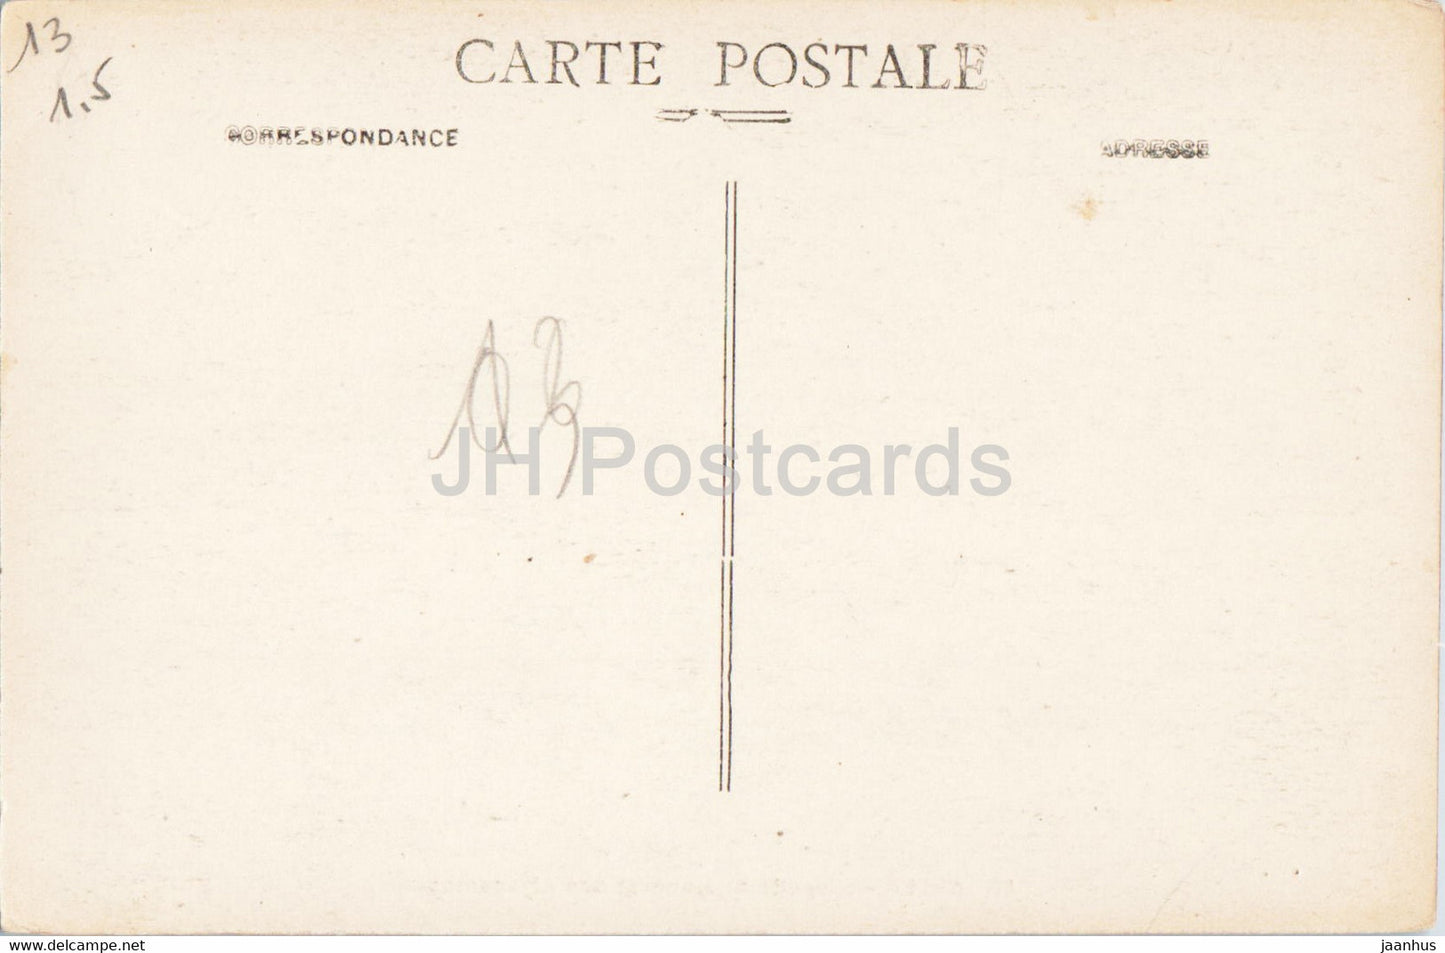 Arles - Chapelle St Honorat des Alyscamps - 80 - old postcard - France - unused